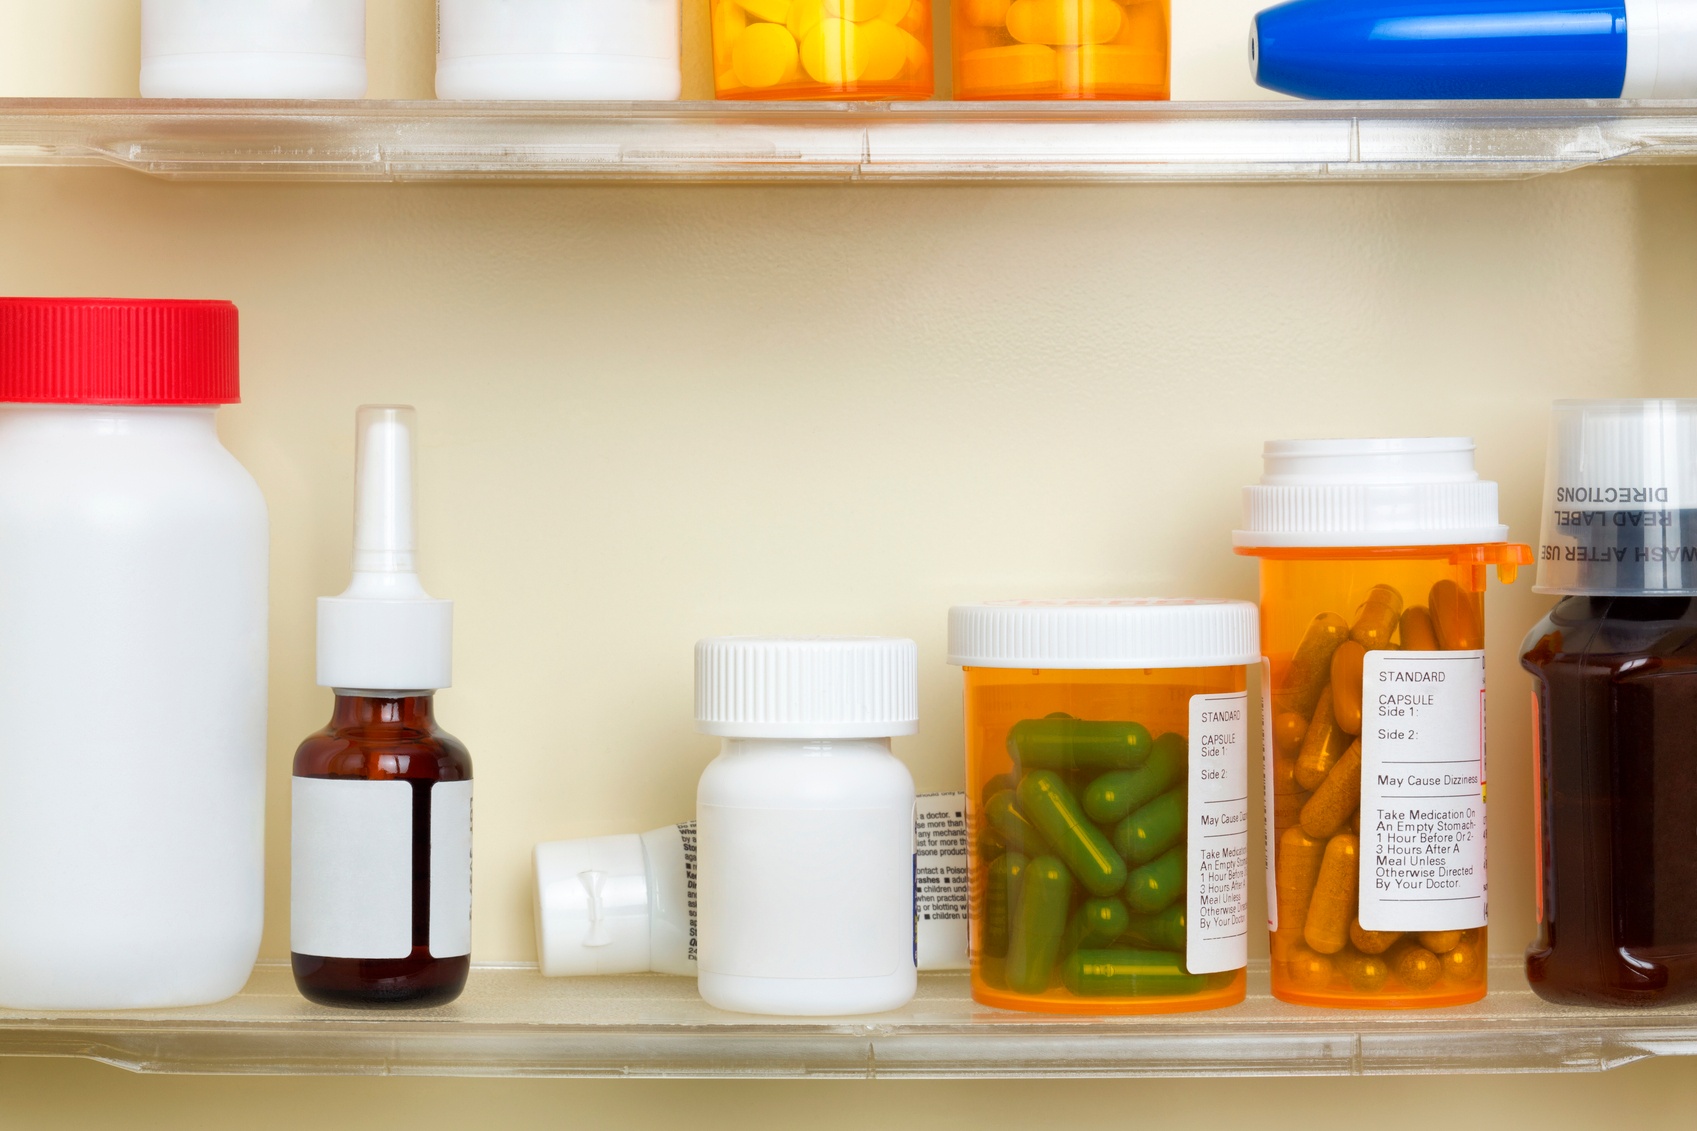 DEA Announces Next Prescription Drug Take Back Day